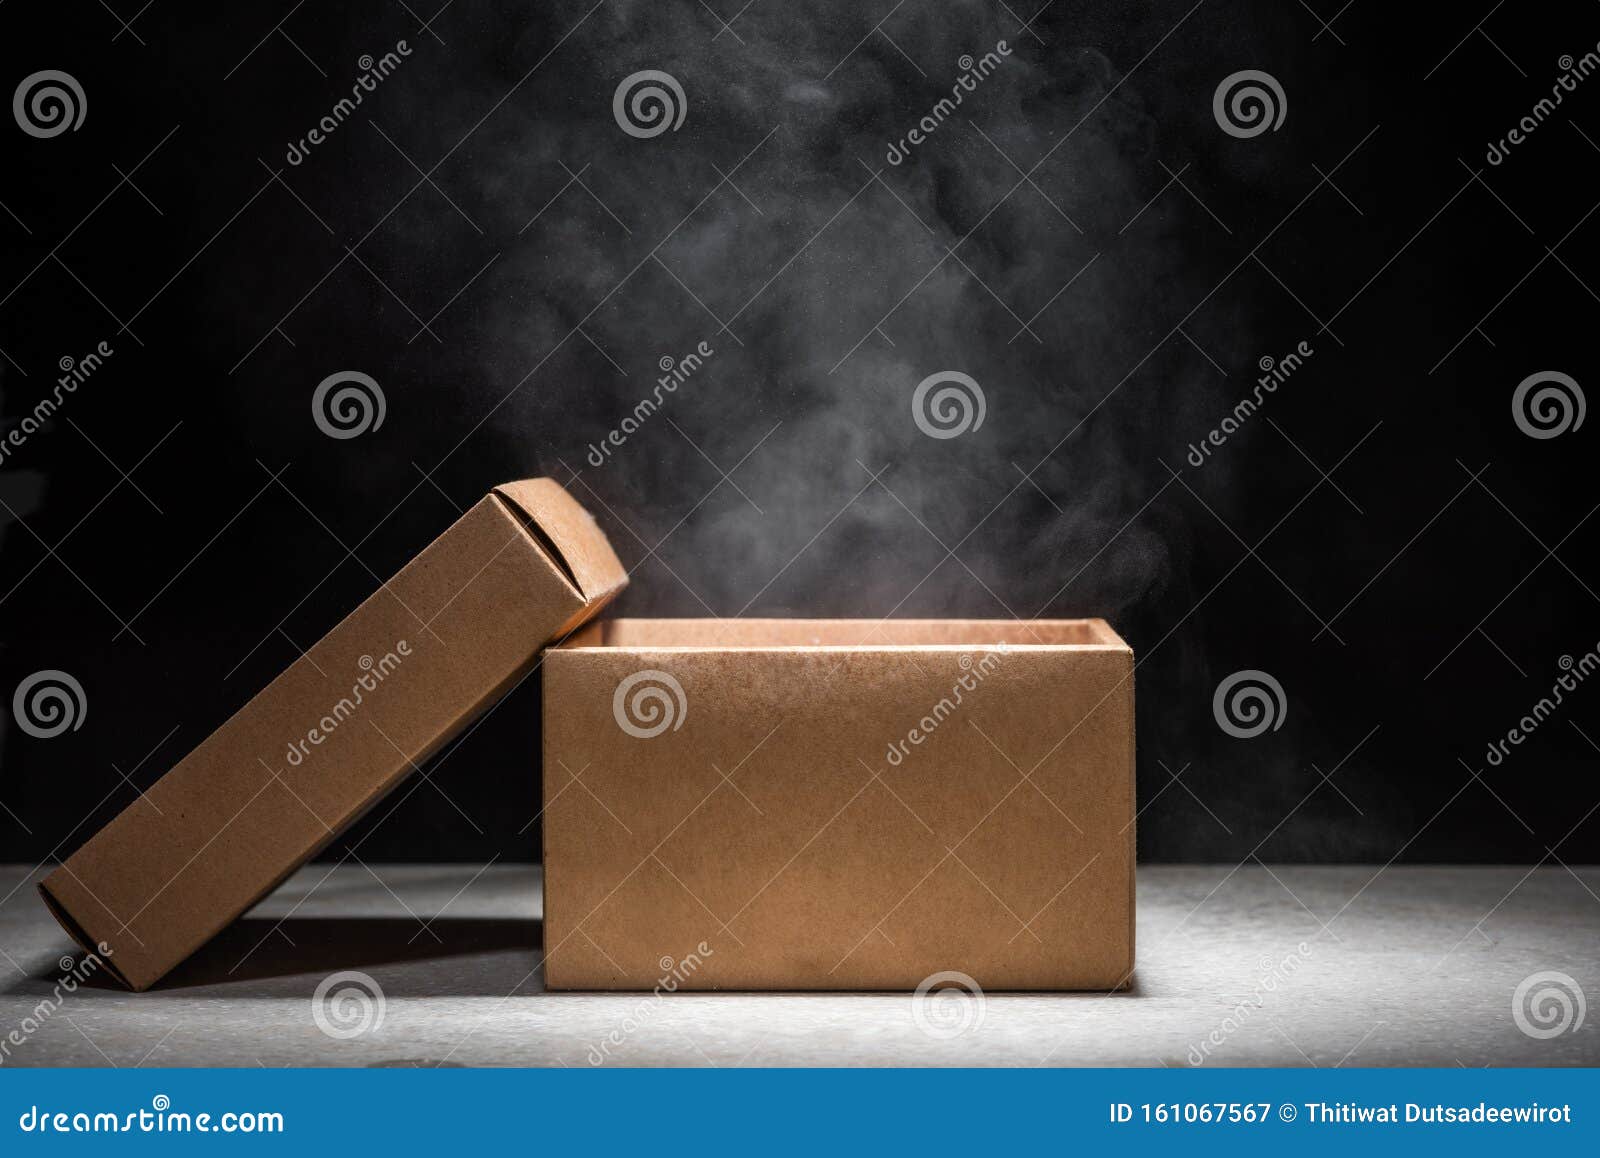 mystery box with smoke